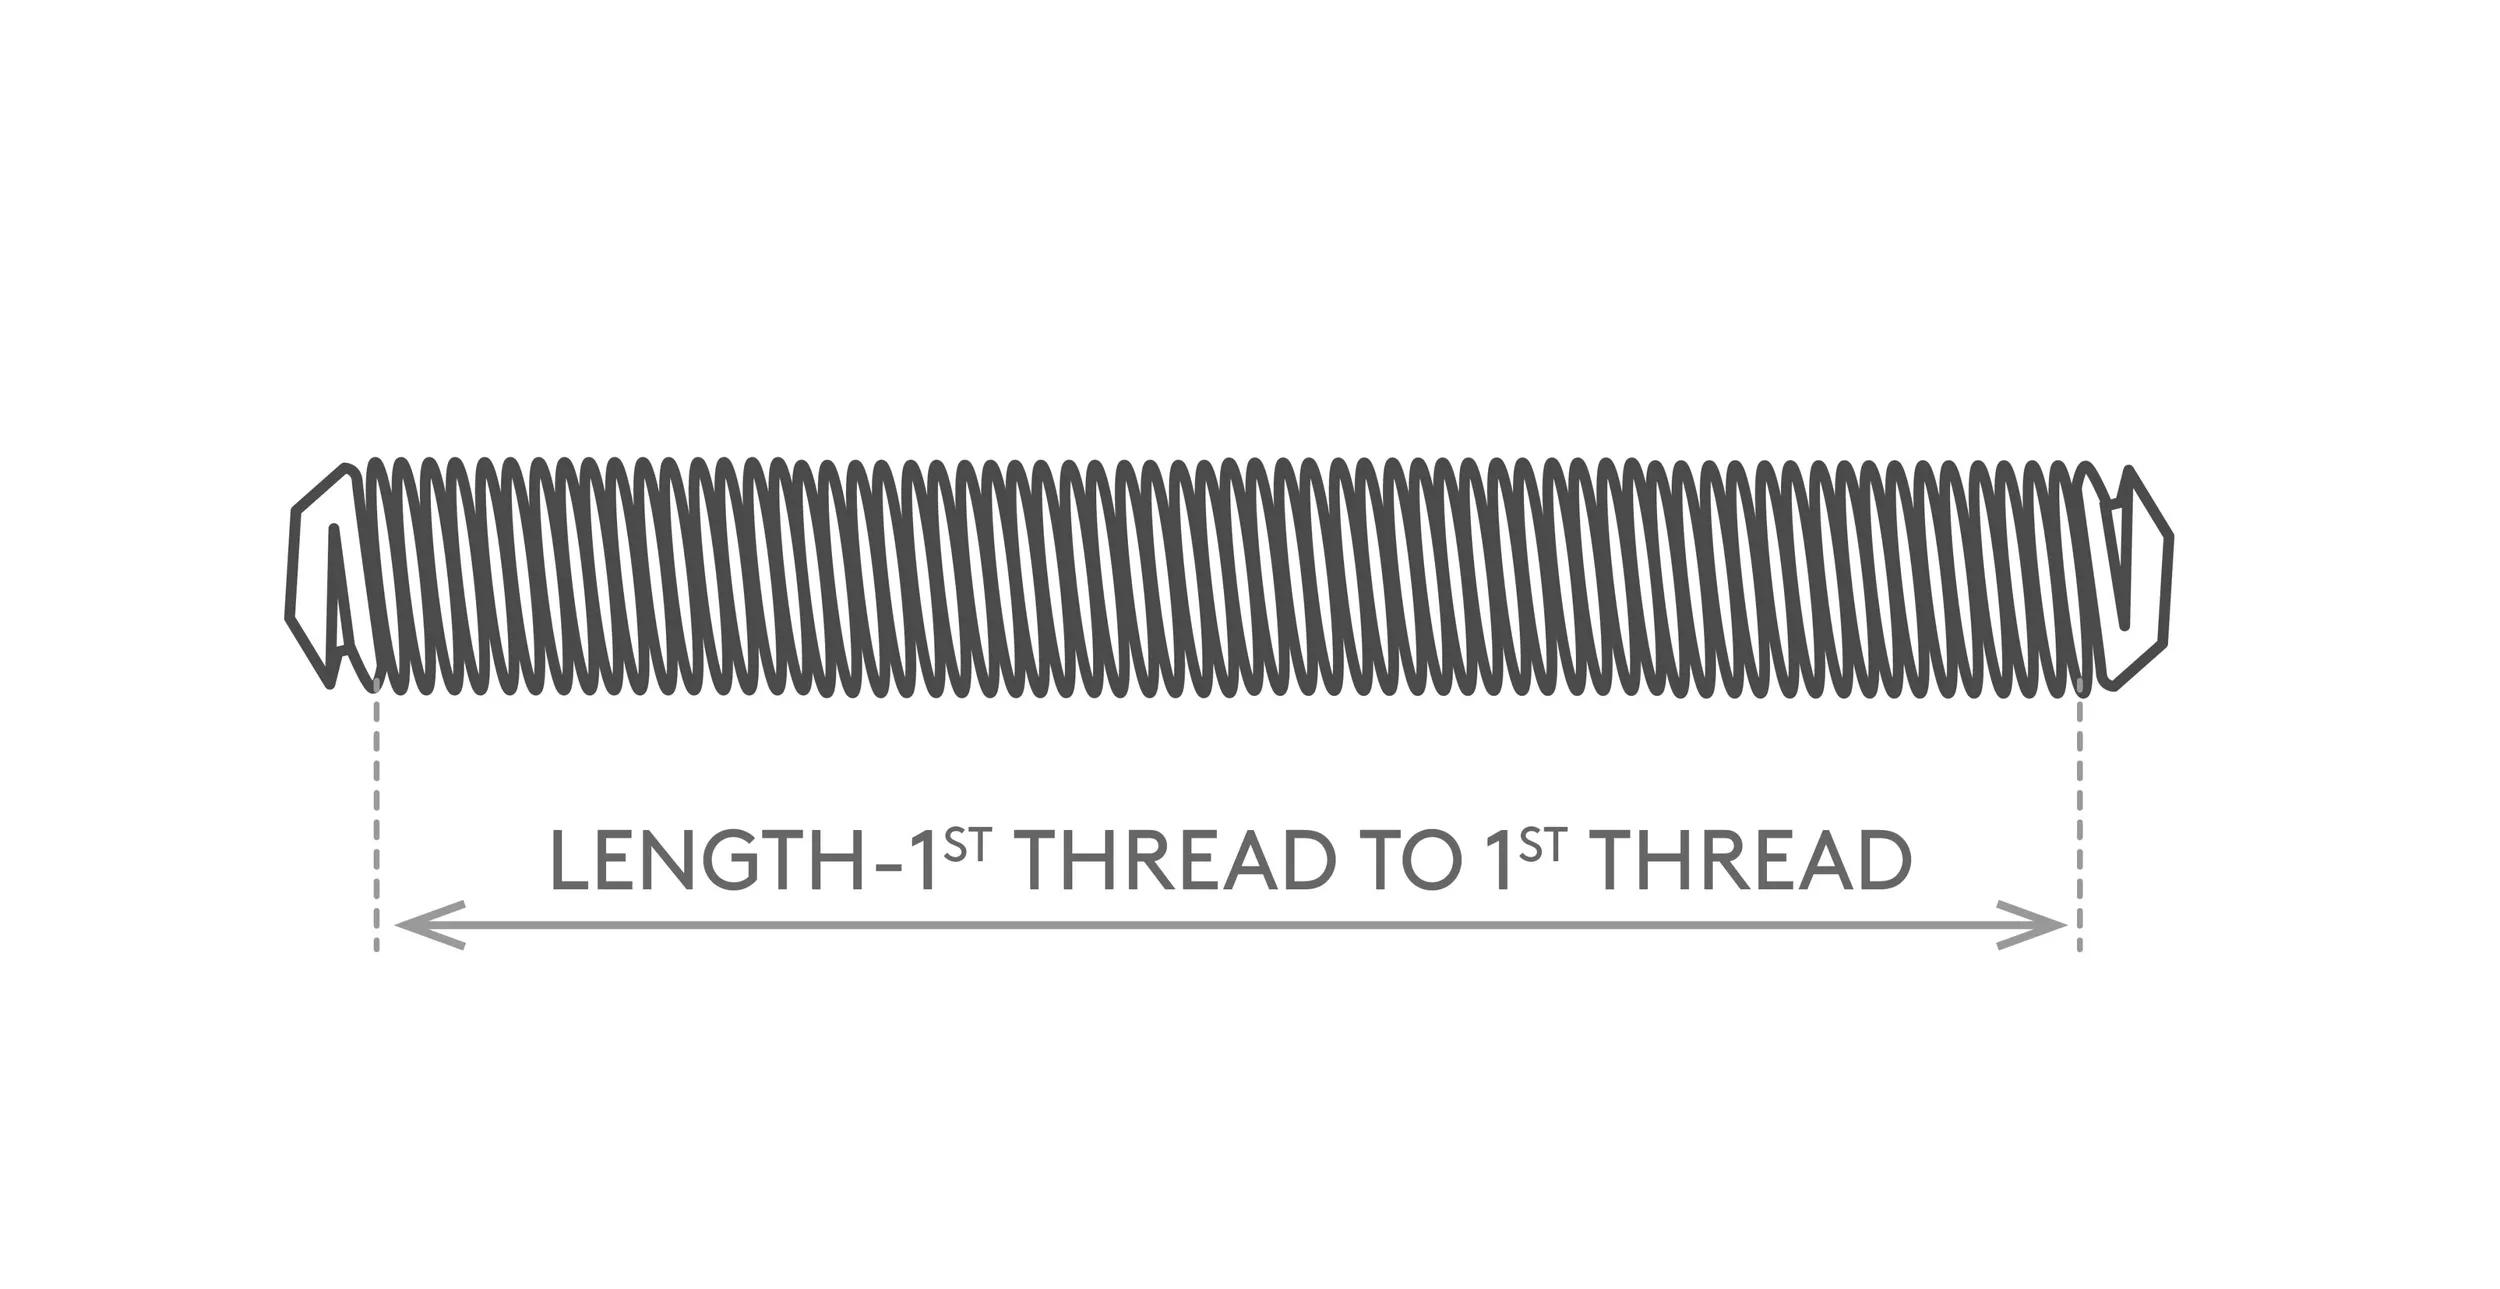 Specifying a threaded rod